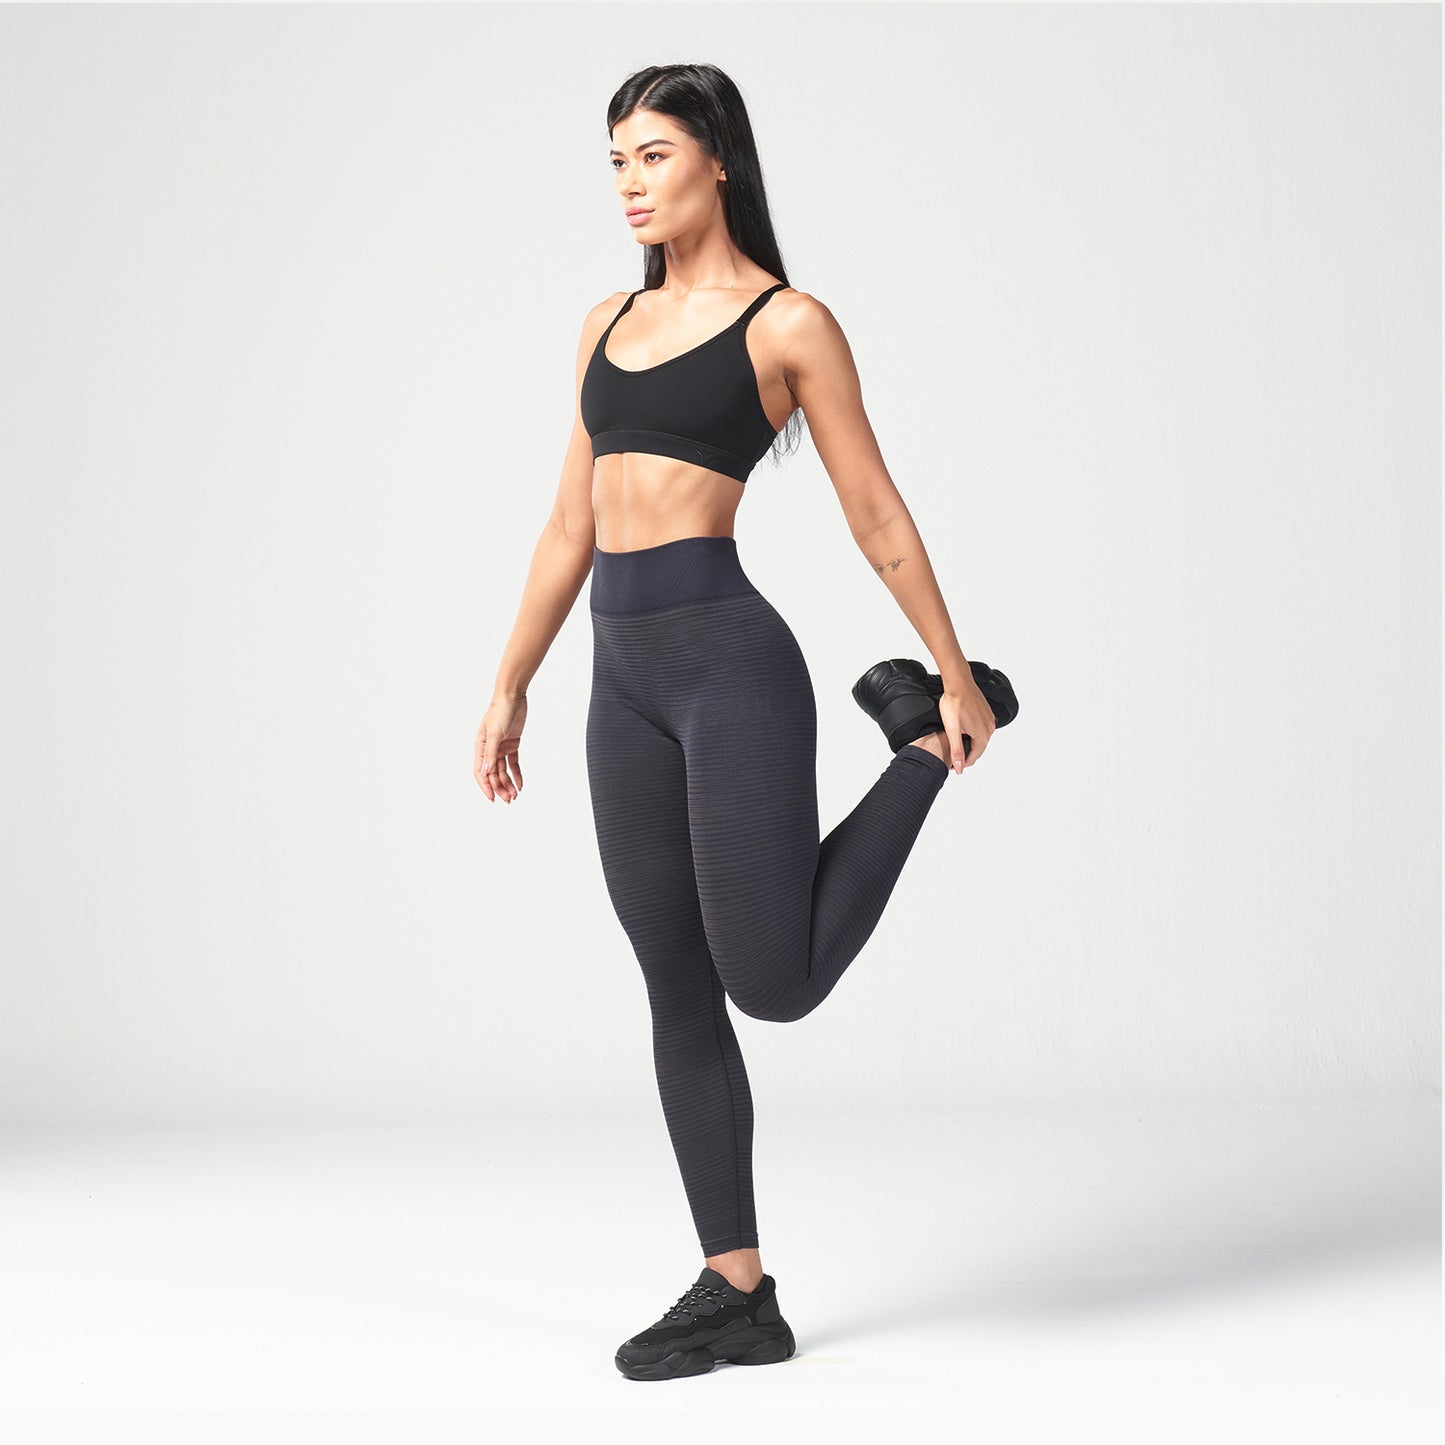 squatwolf-workout-clothes-infinity-luna-bra-black-sports-bra-for-gym